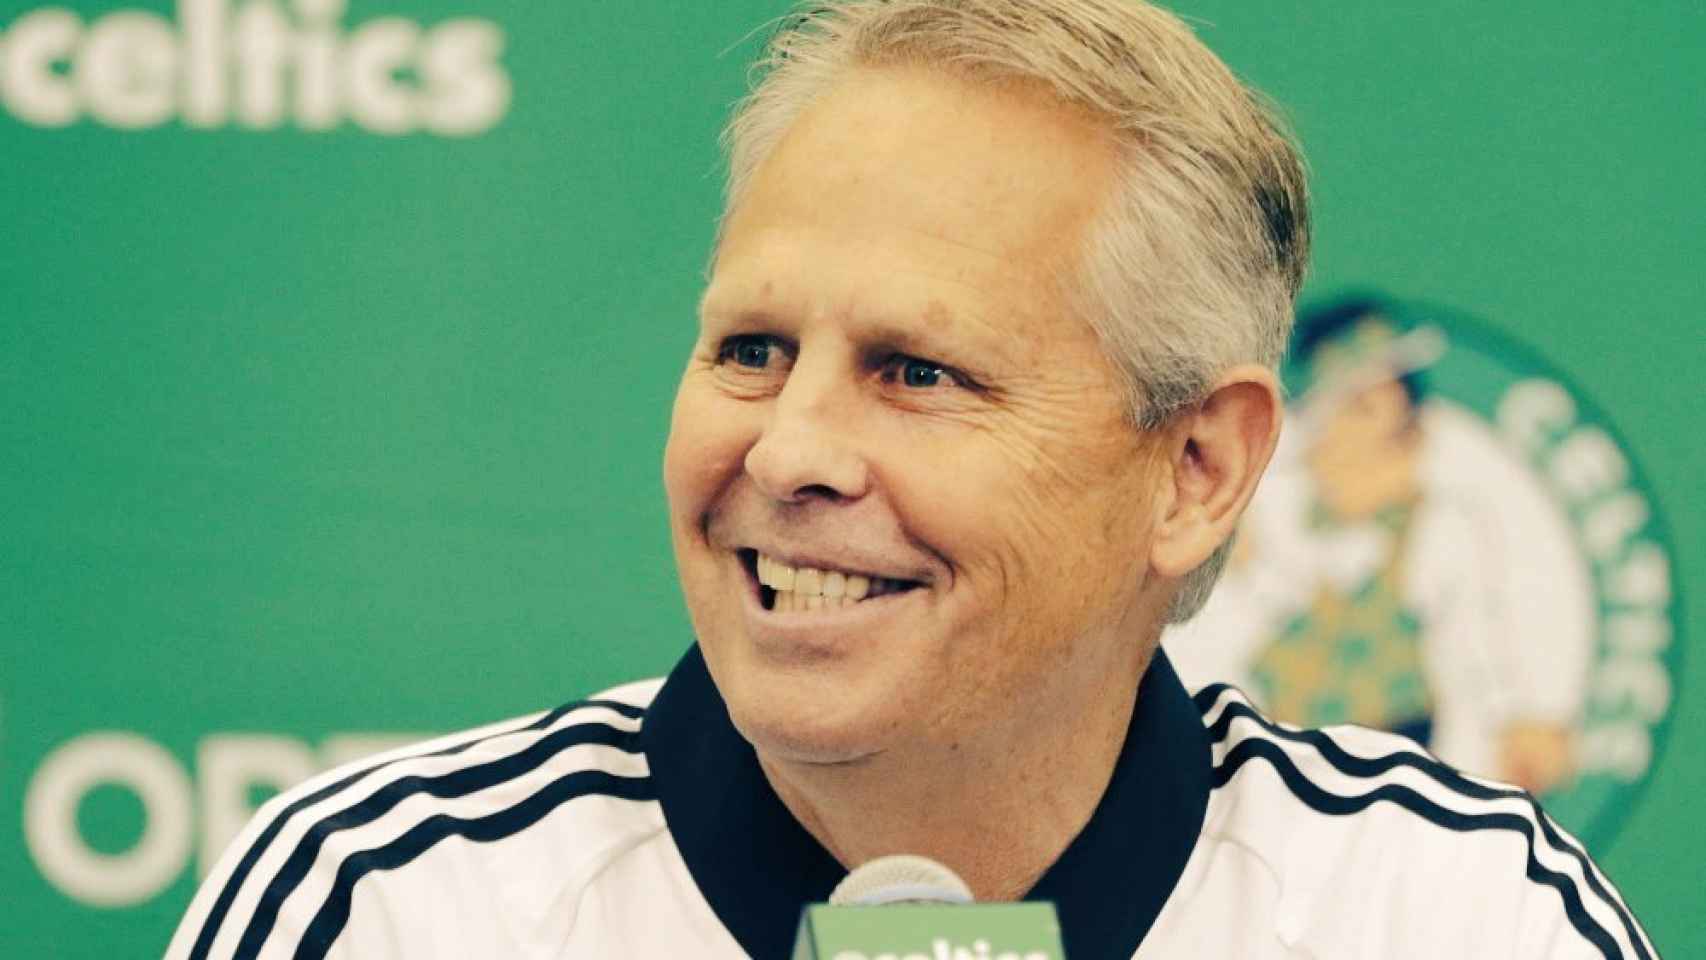 Danny Ainge, mánager general de los Boston Celtics. Foto: Twitter. (@RealBasketFlow)